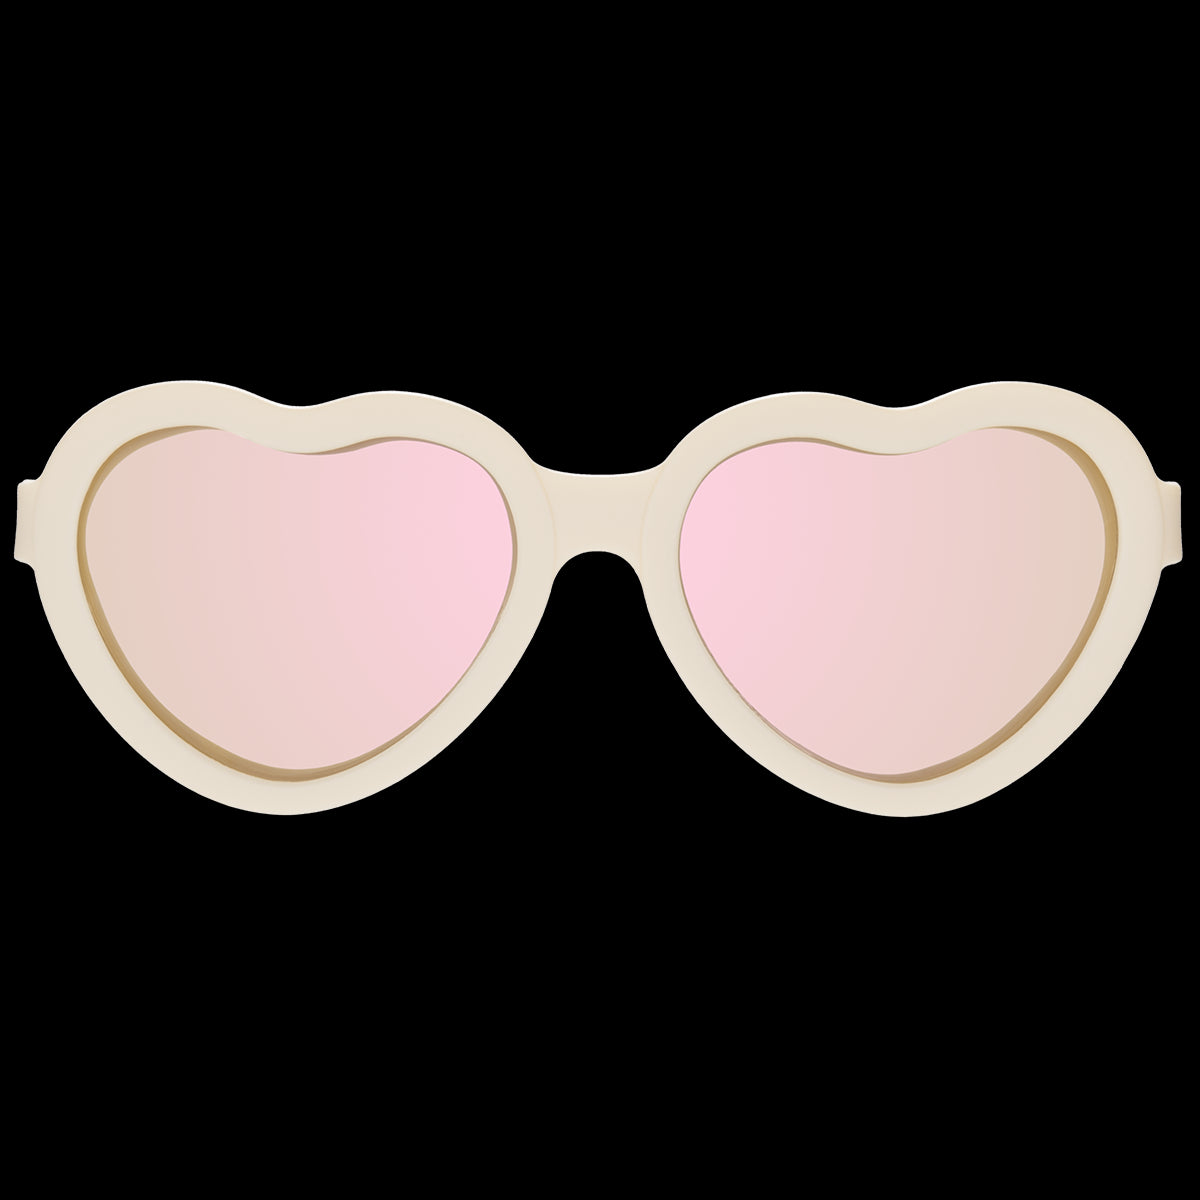 Sweet Cream Heart in Rose Gold Polarized Mirrored Lenses